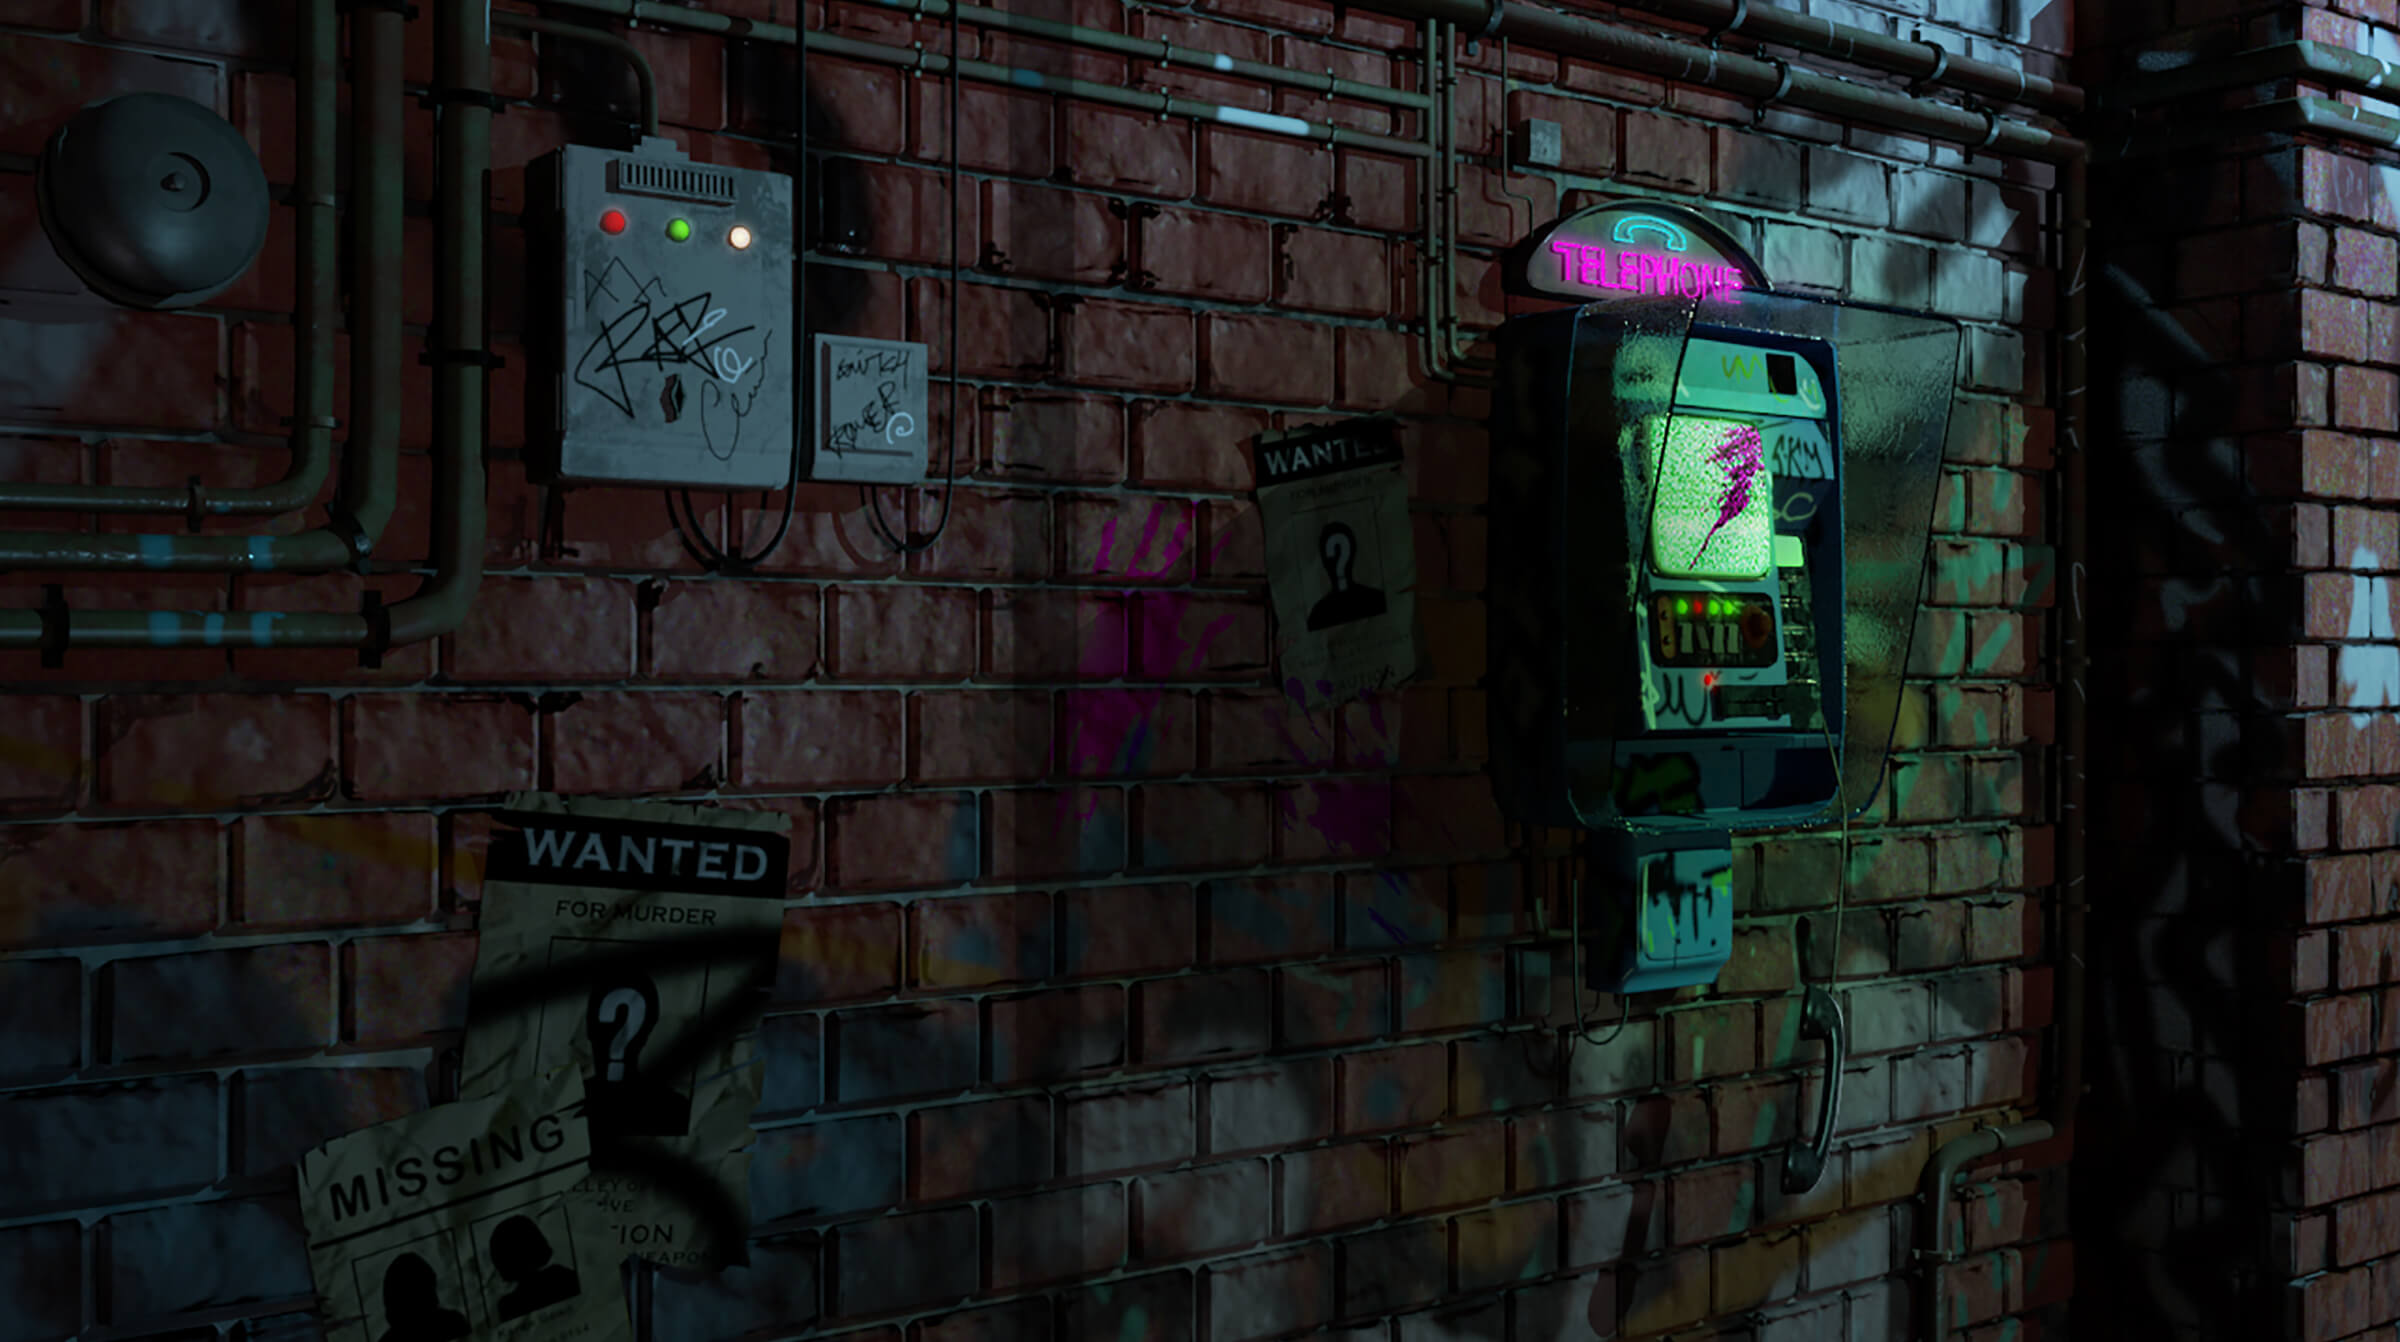 A neon-lit public telephone in a graffiti-decorated alley